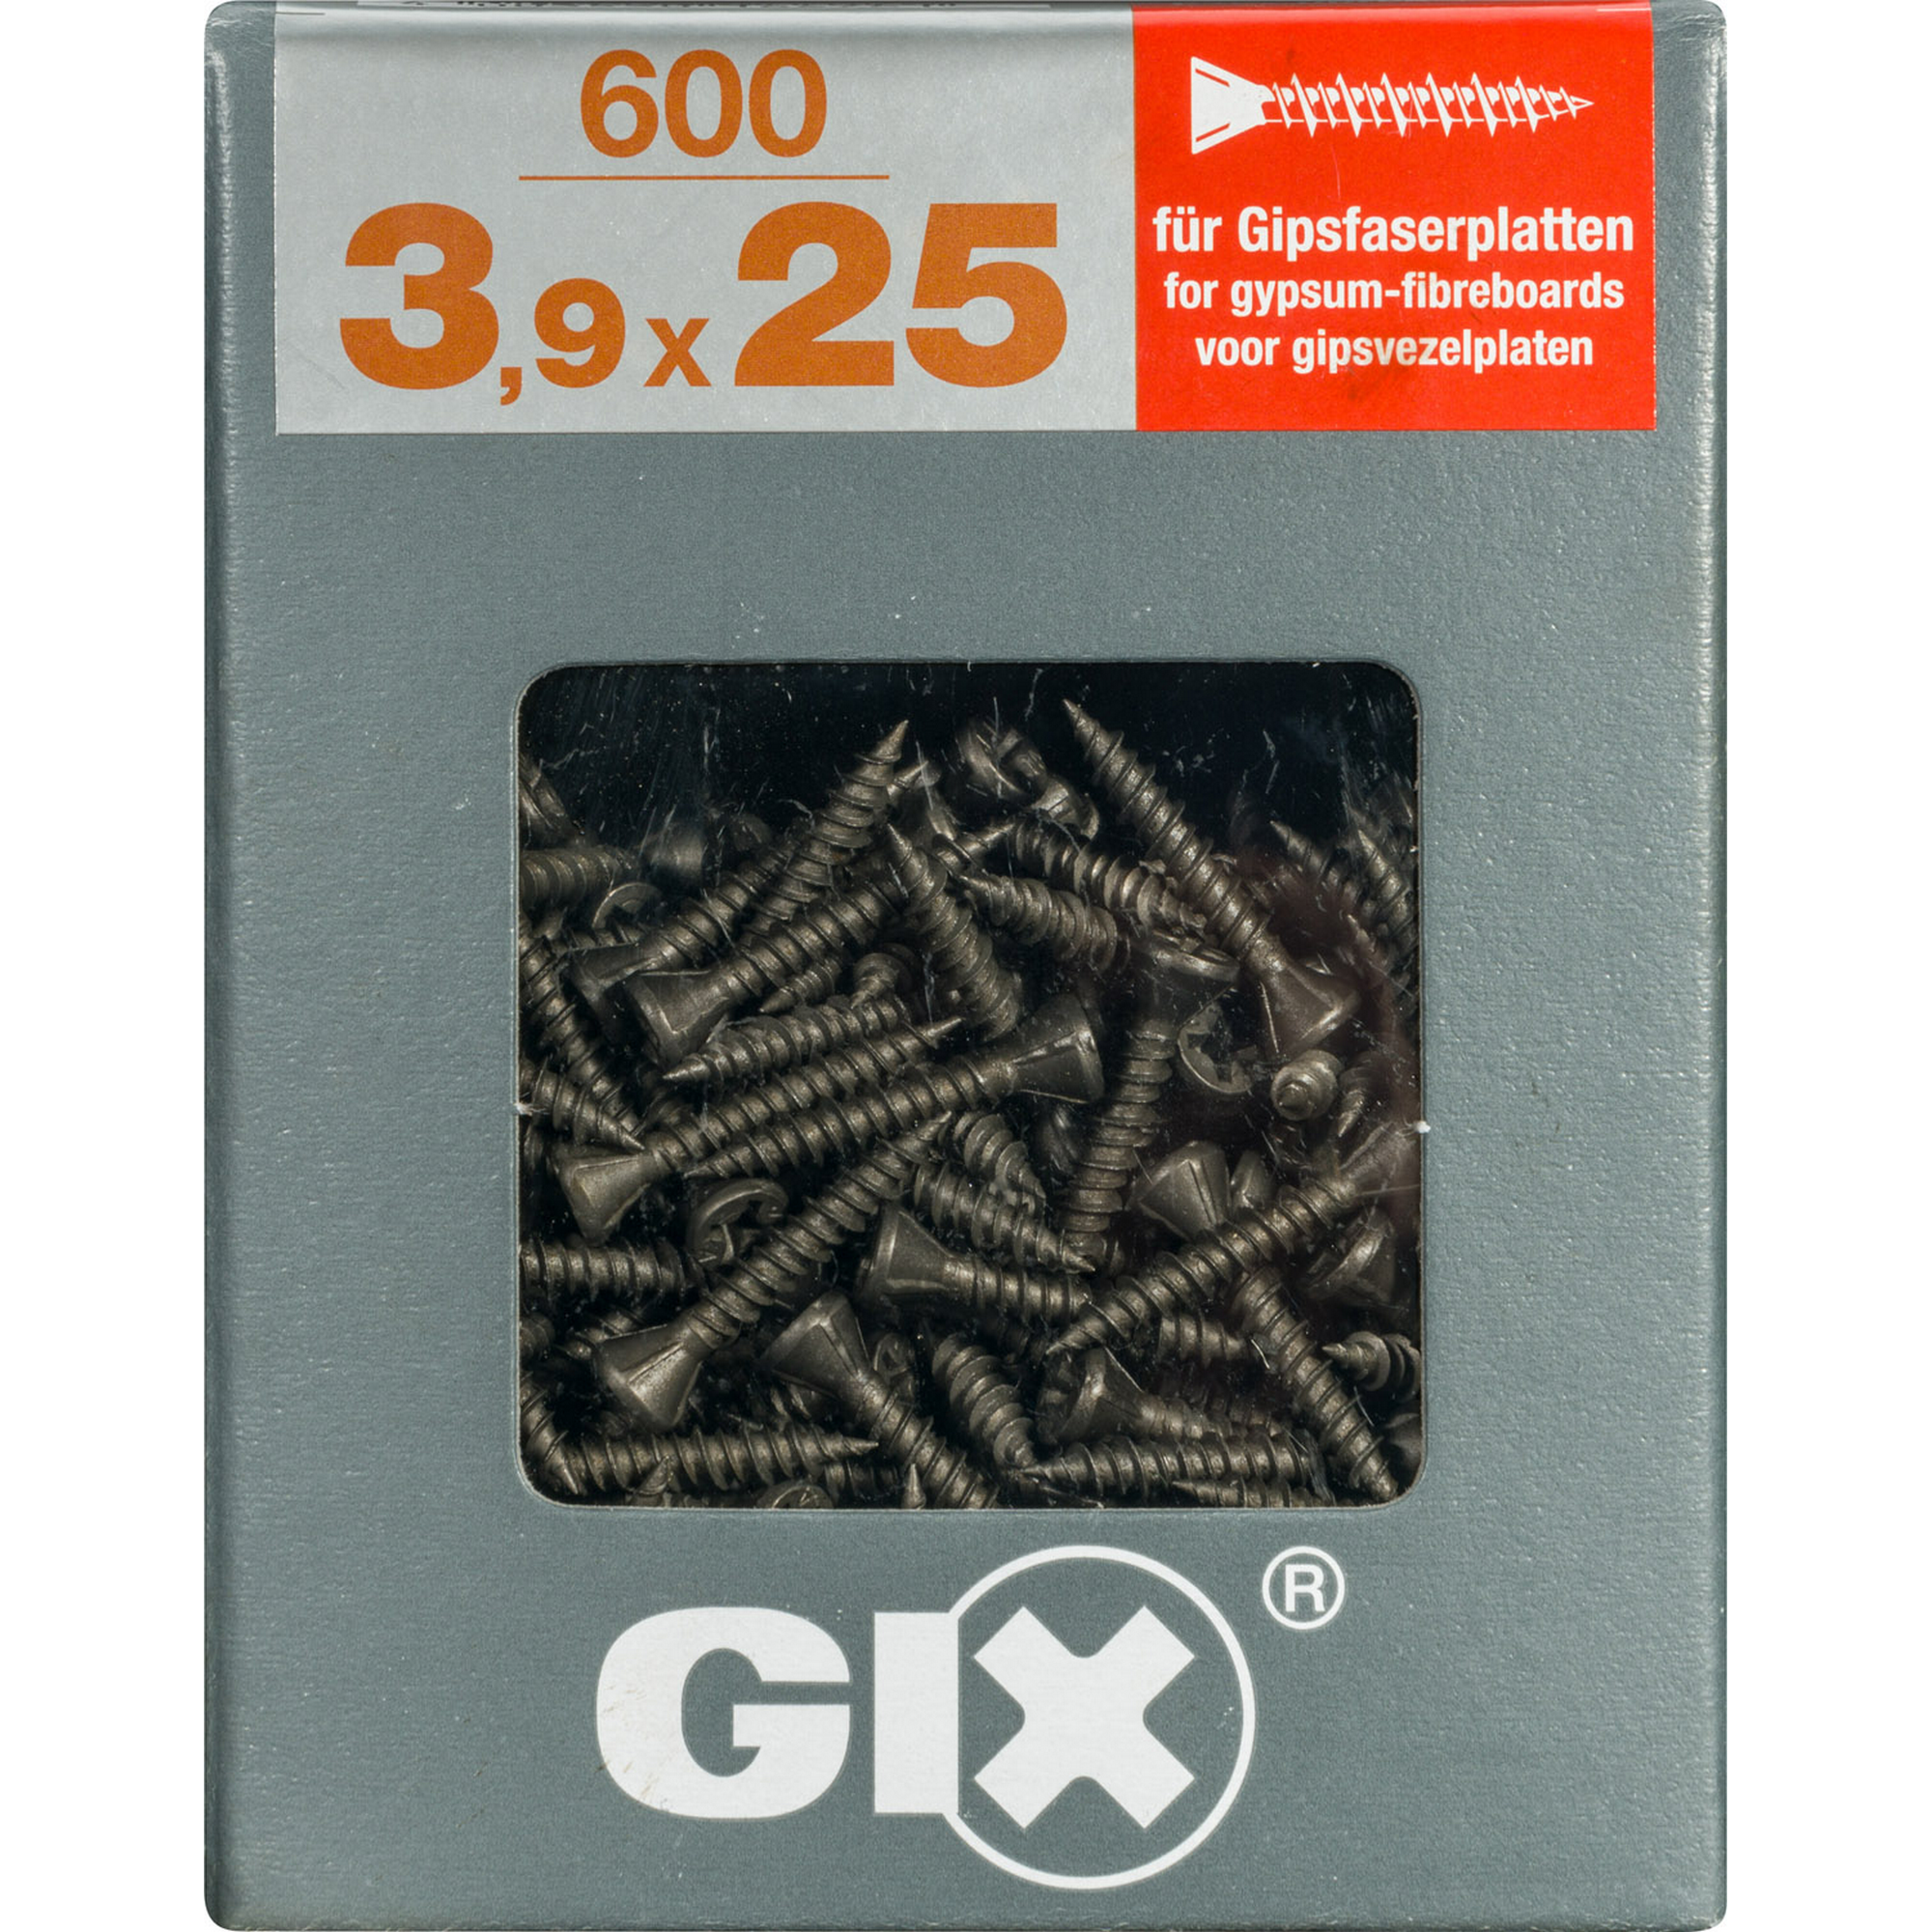 Trockenbauschraube 'Gix-C' PH2 Ø 3,9 x 25 mm 600 Stück + product picture